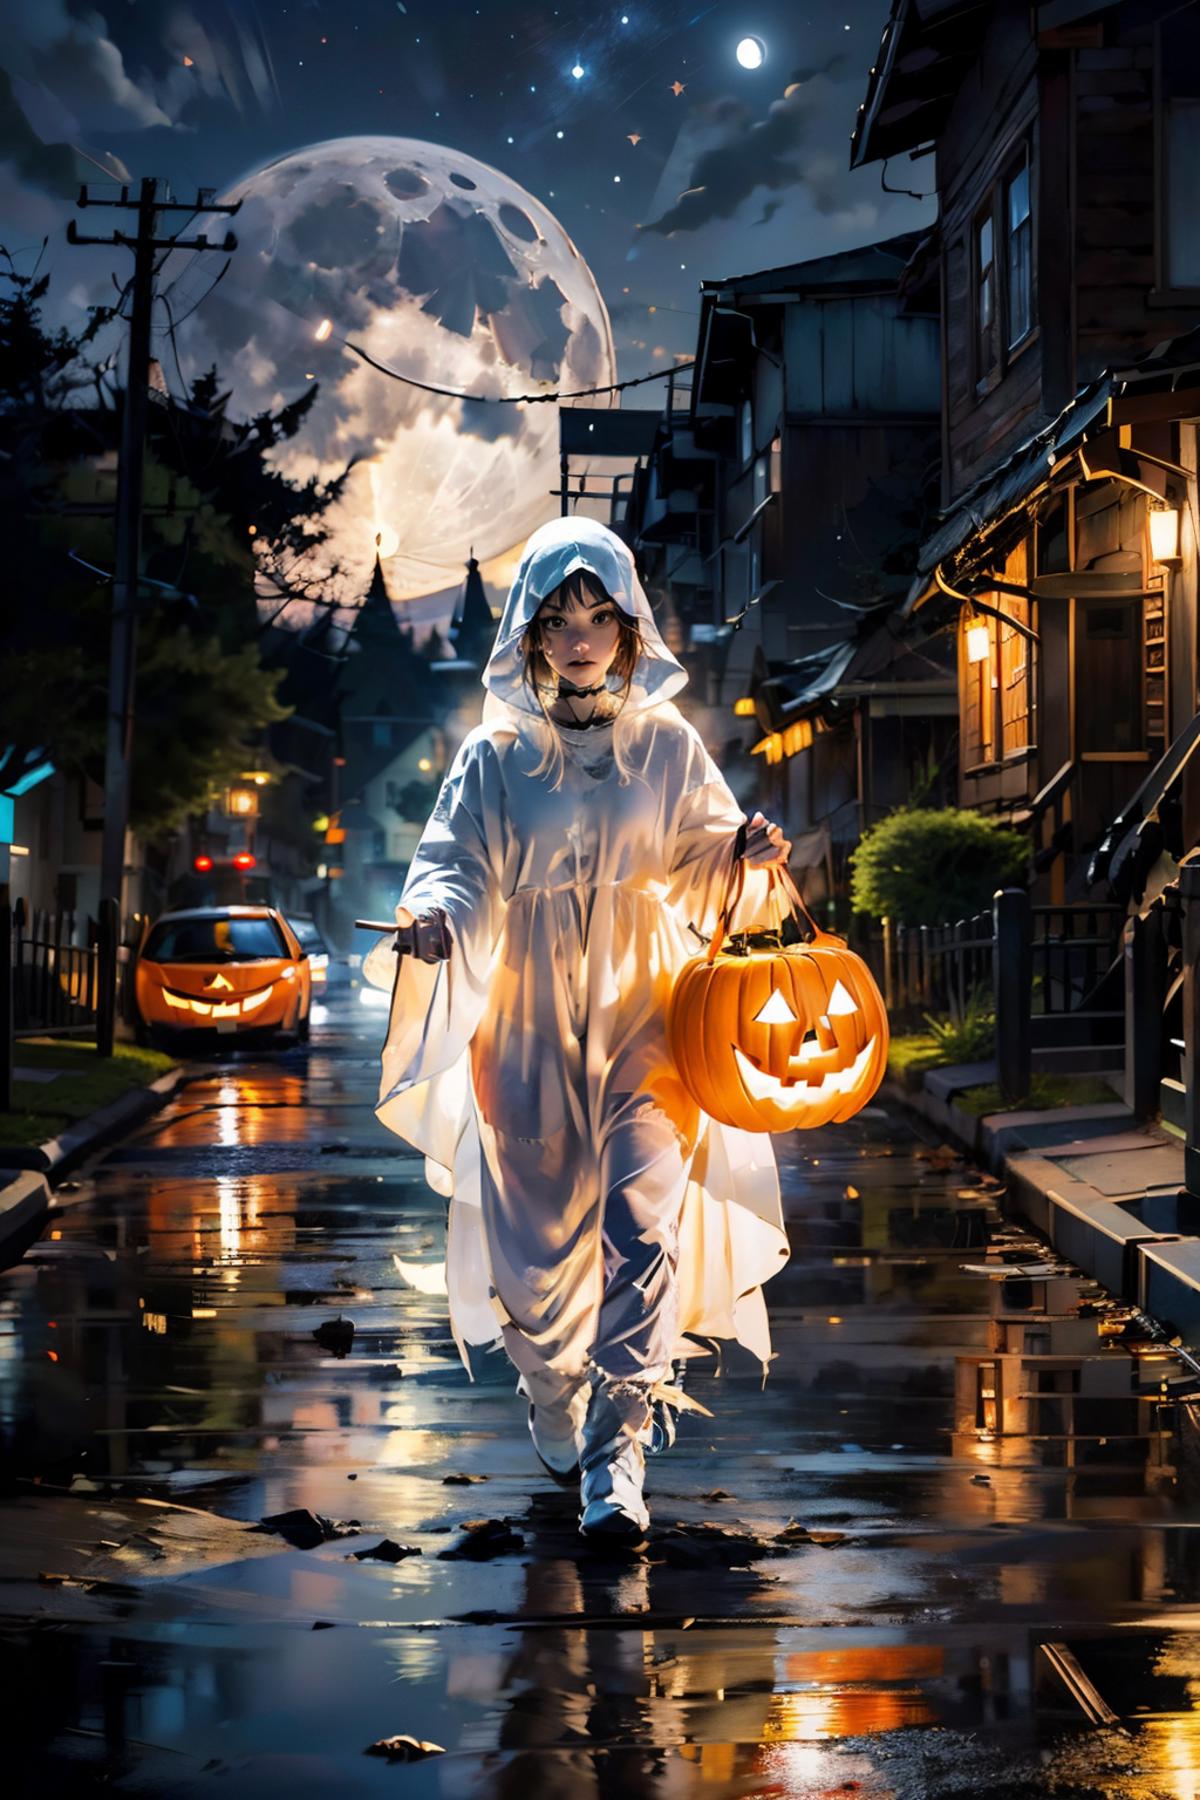 幽灵装·万圣节Ghost costume - Halloween image by wikkitikki